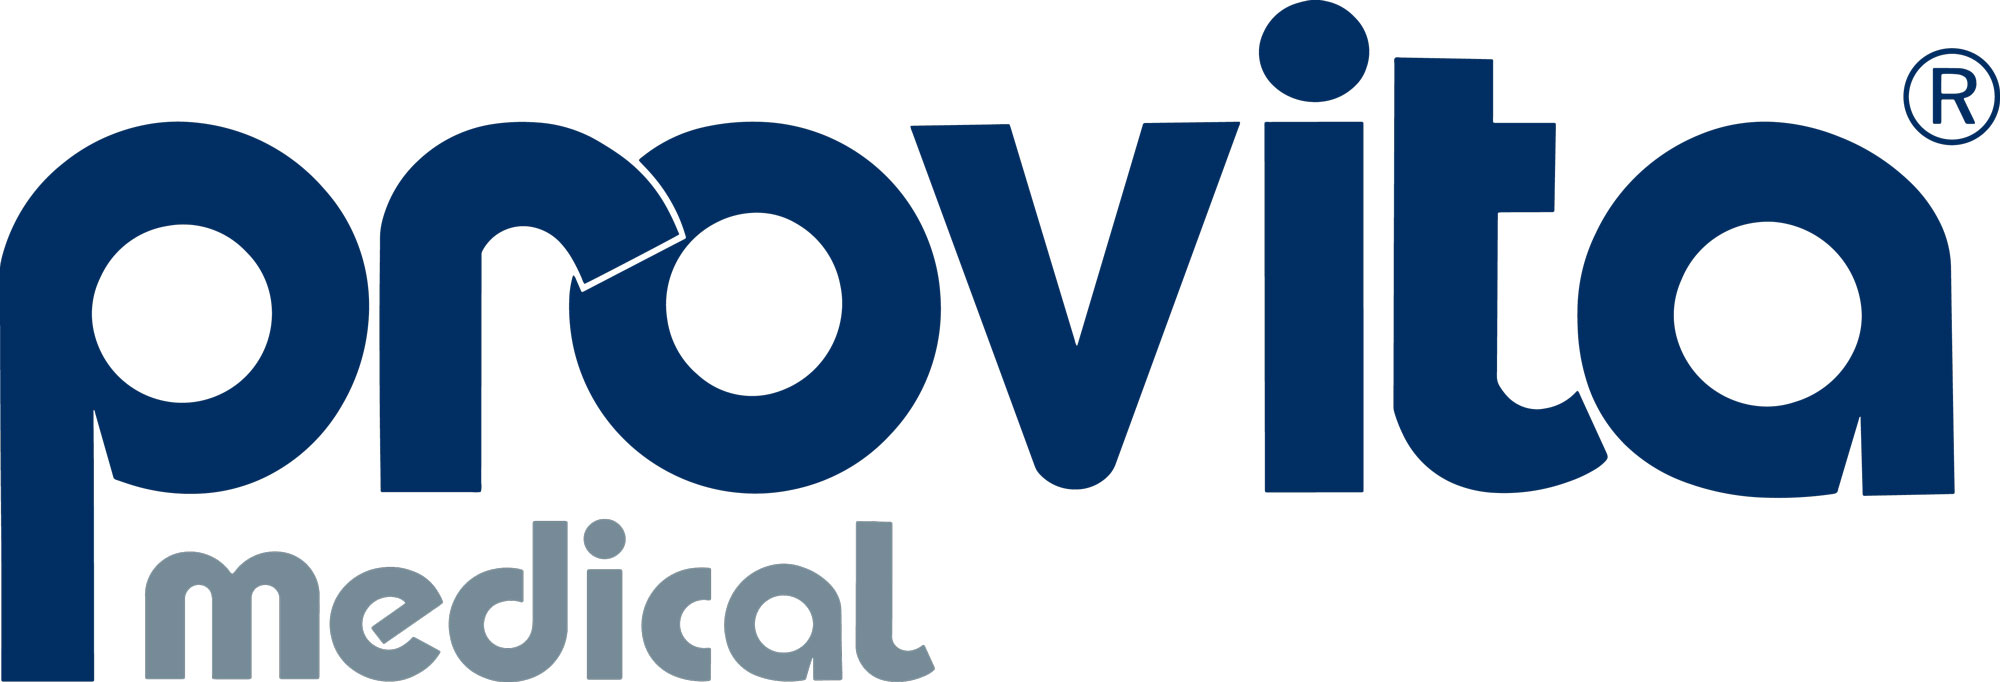 Provita Medical Logo